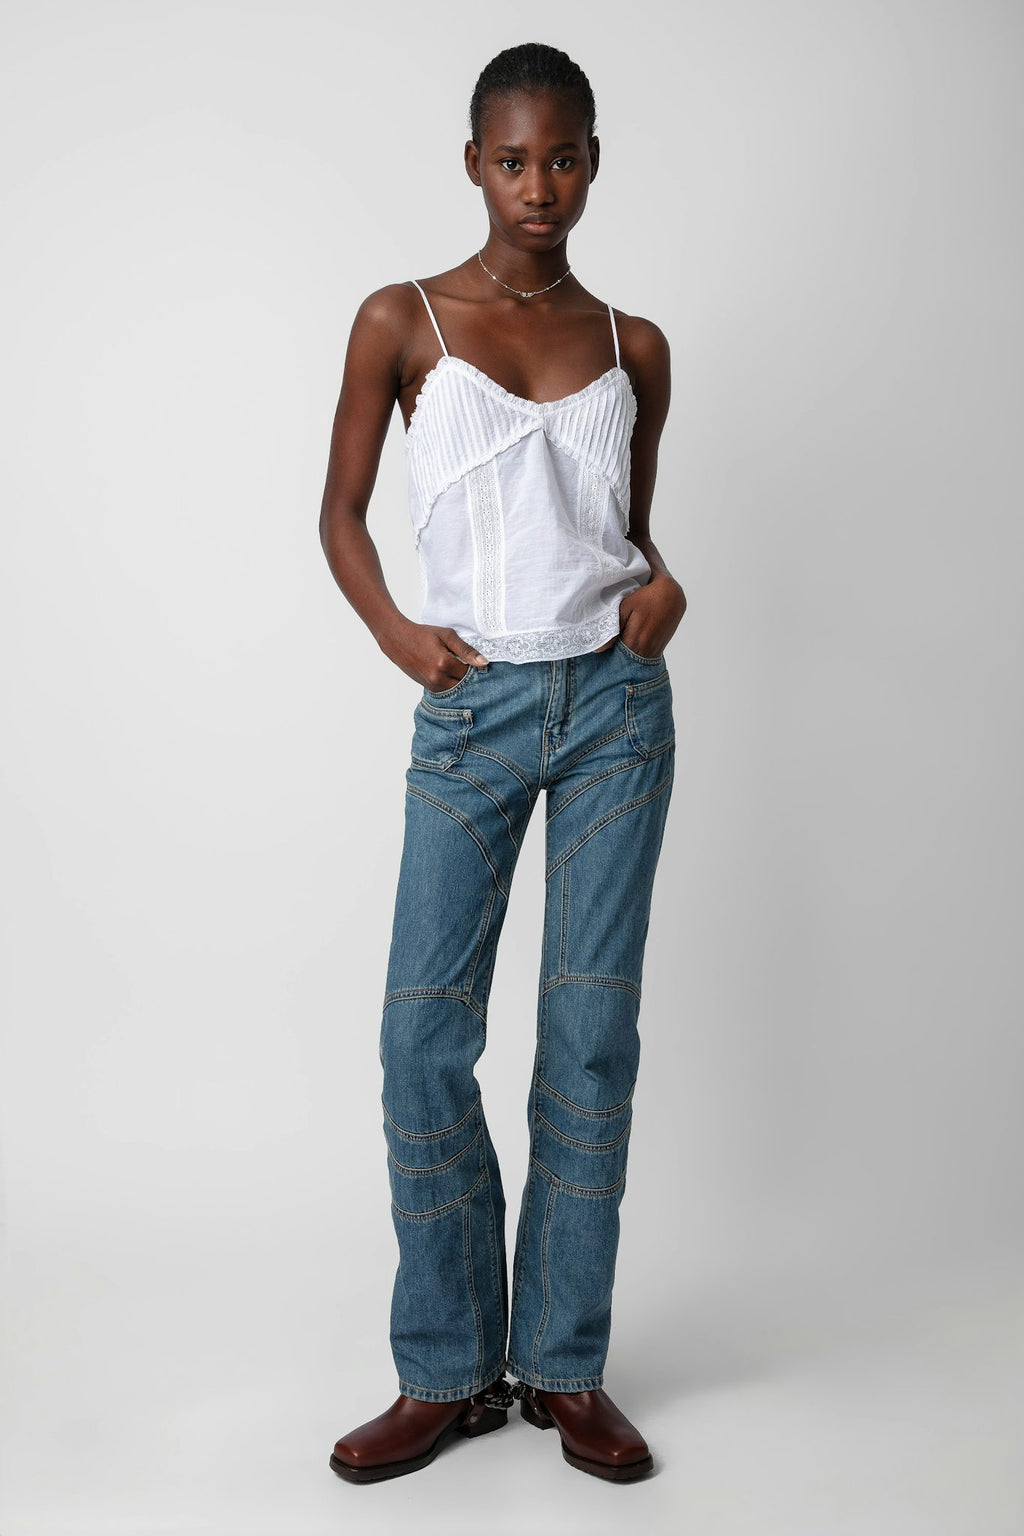 wybzd Women Summer Short Skinny Vest Tops Sleeveless Sheer Mesh Cover Up  See Through Crop Top Grunge Streetwear Silver L 